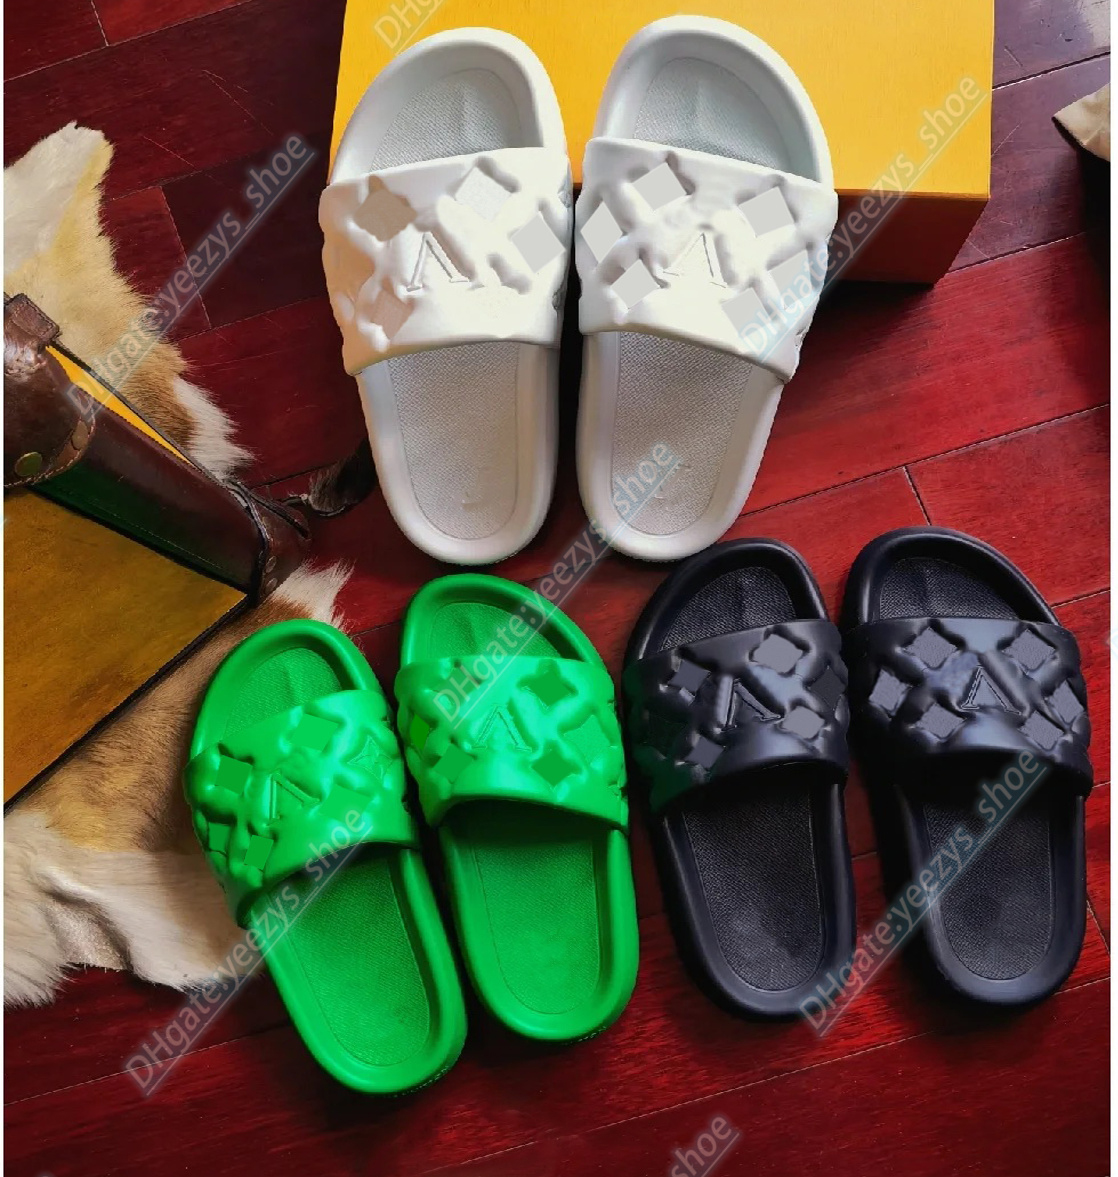 

luxury sandal designer shoe man woman slipper rubber embossed slide summer Beach Outdoor Leisure waterproof waterfront mule with box, #4 green